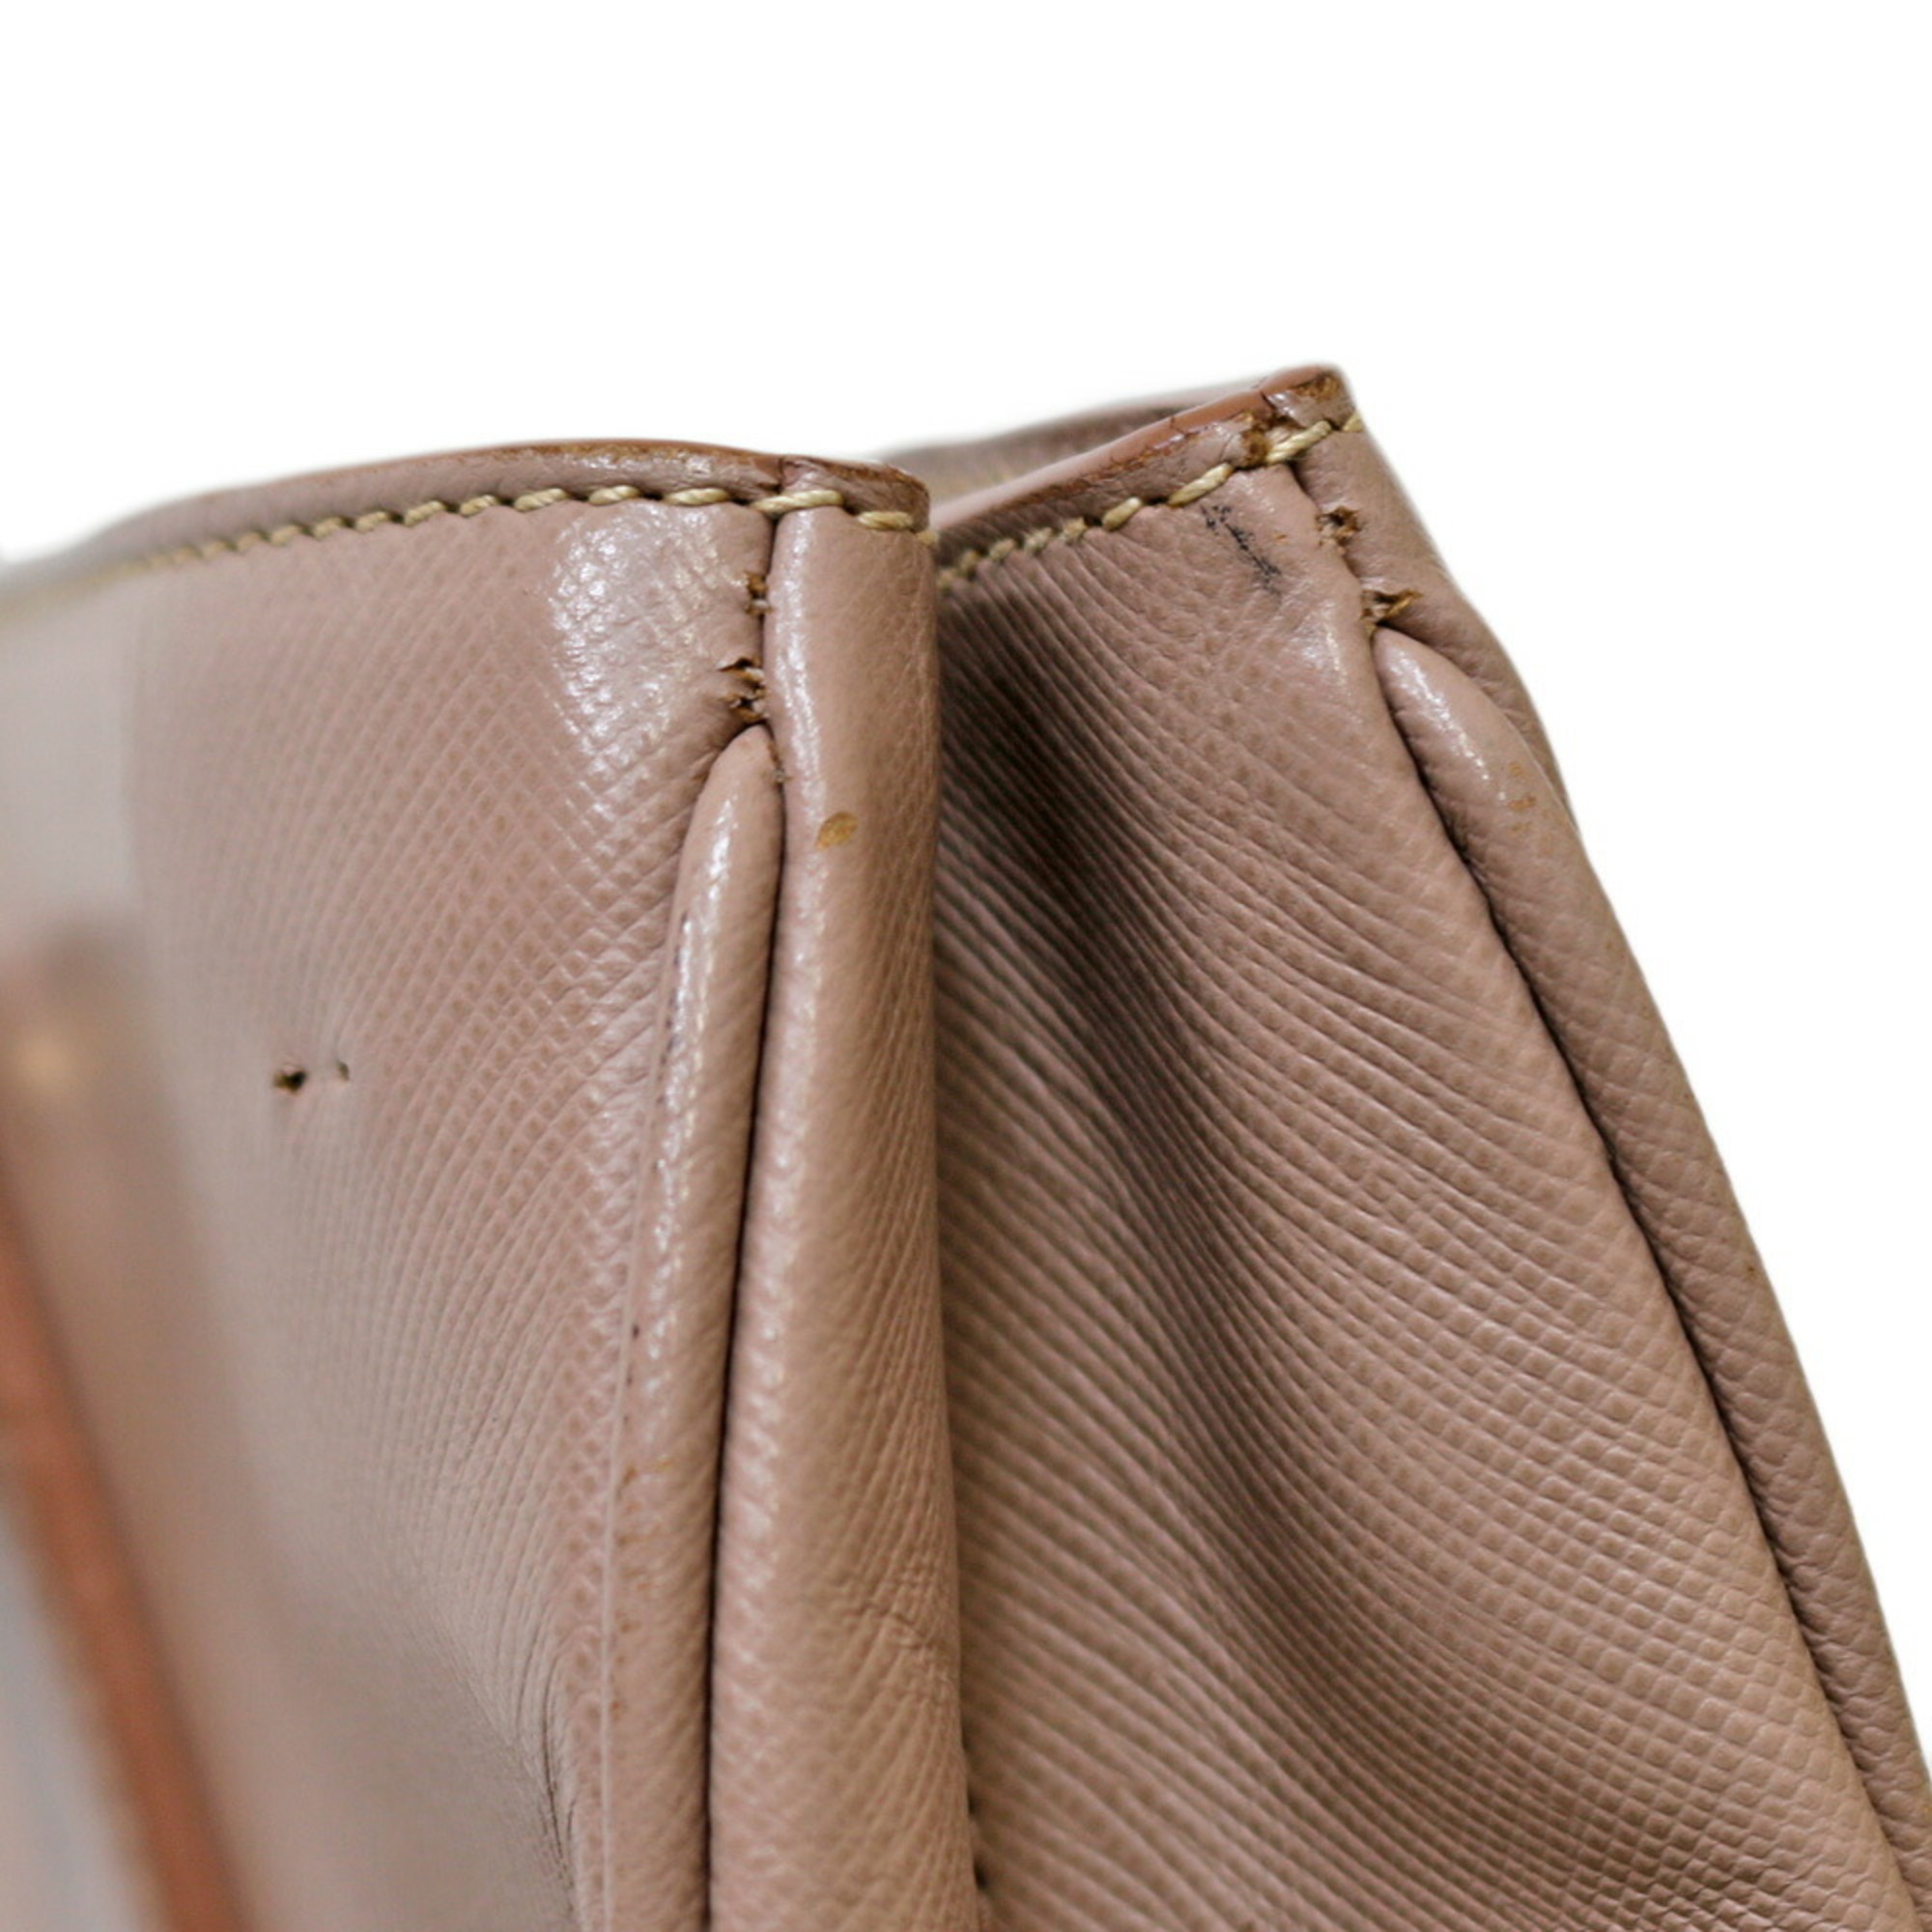 Prada Saffiano Women's Leather Shoulder Bag Pink